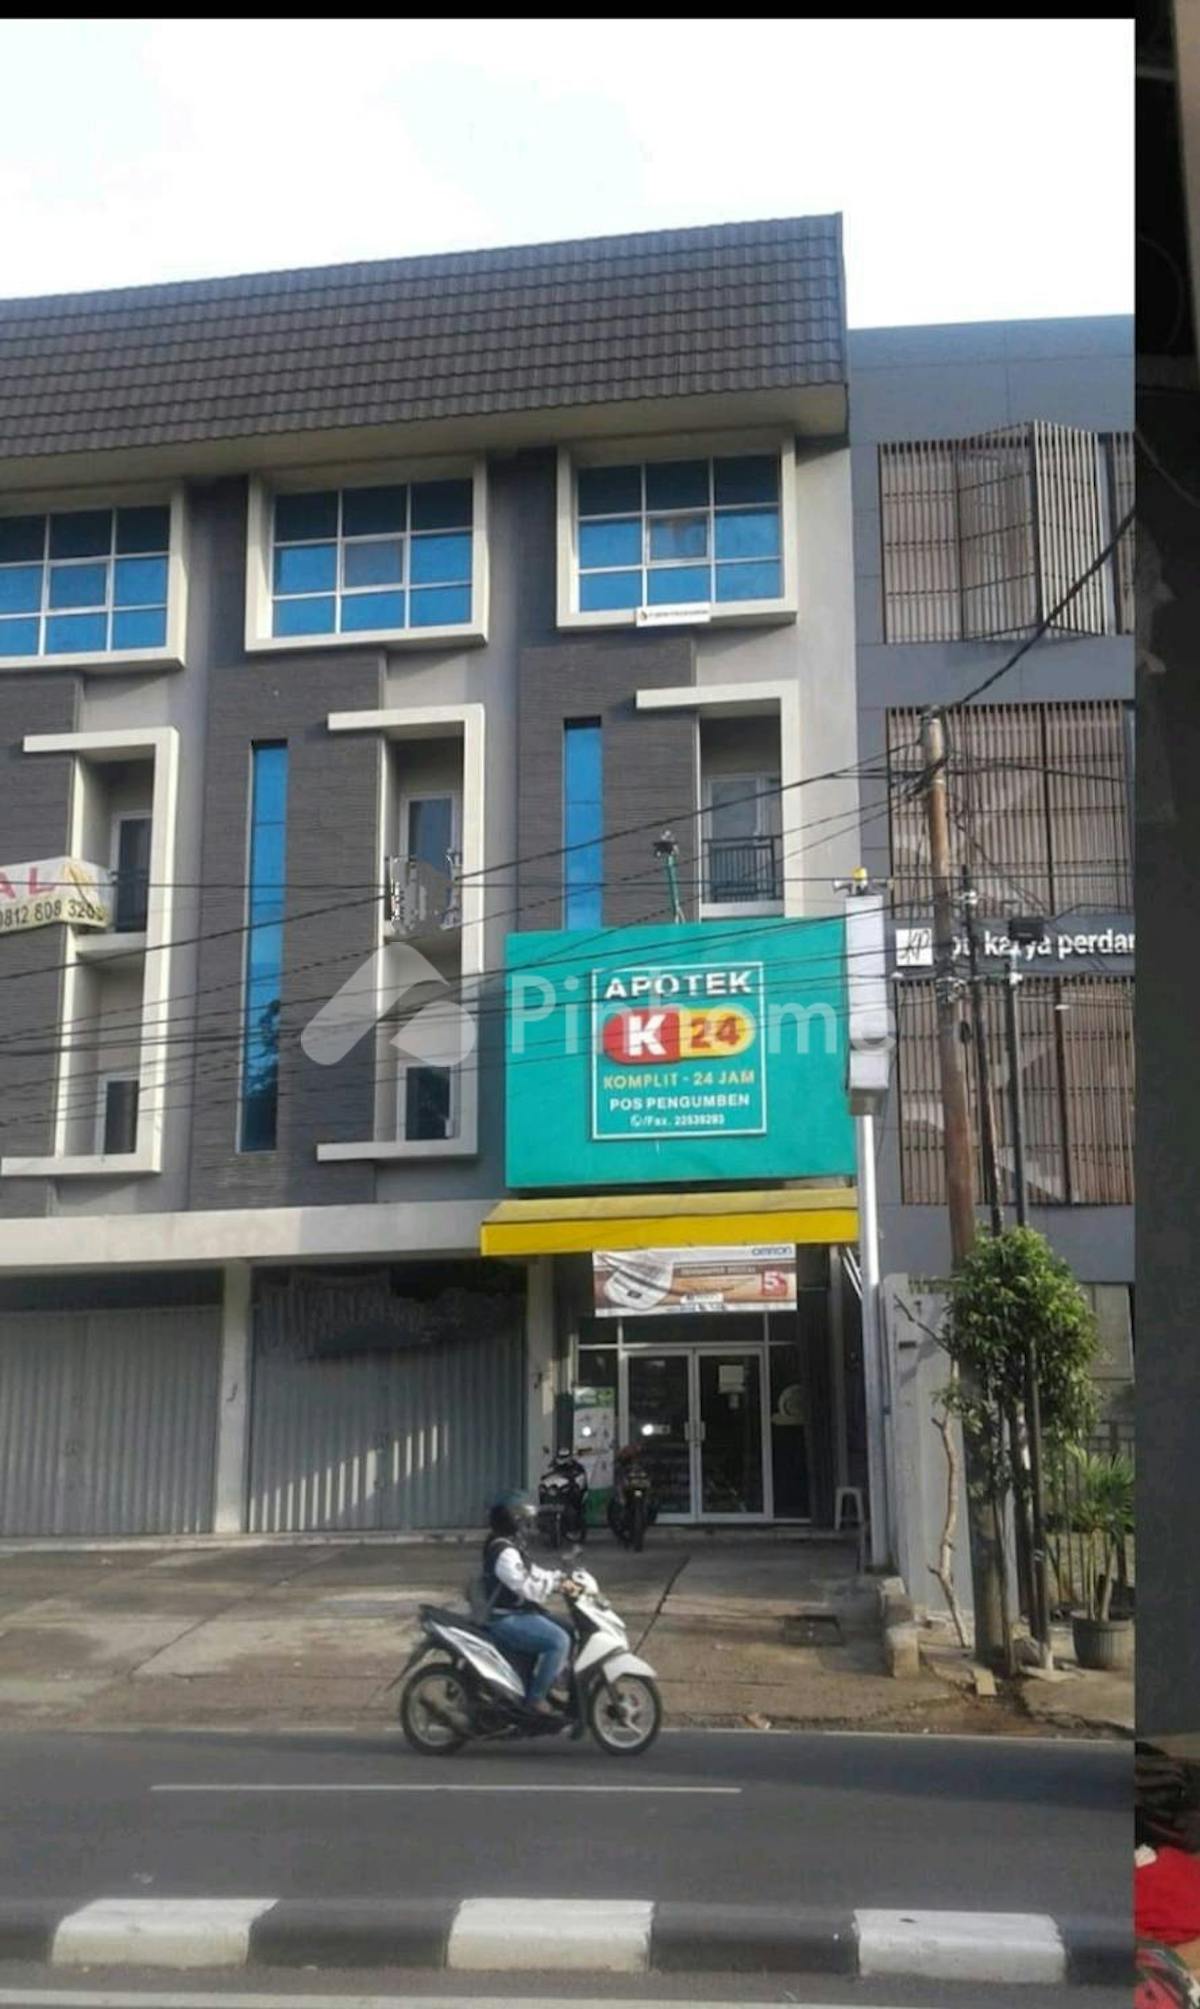 Disewakan Ruko Lokasi Strategis Dekat Perkantoran di Jl. Pos Pengumben Raya - Gambar 1